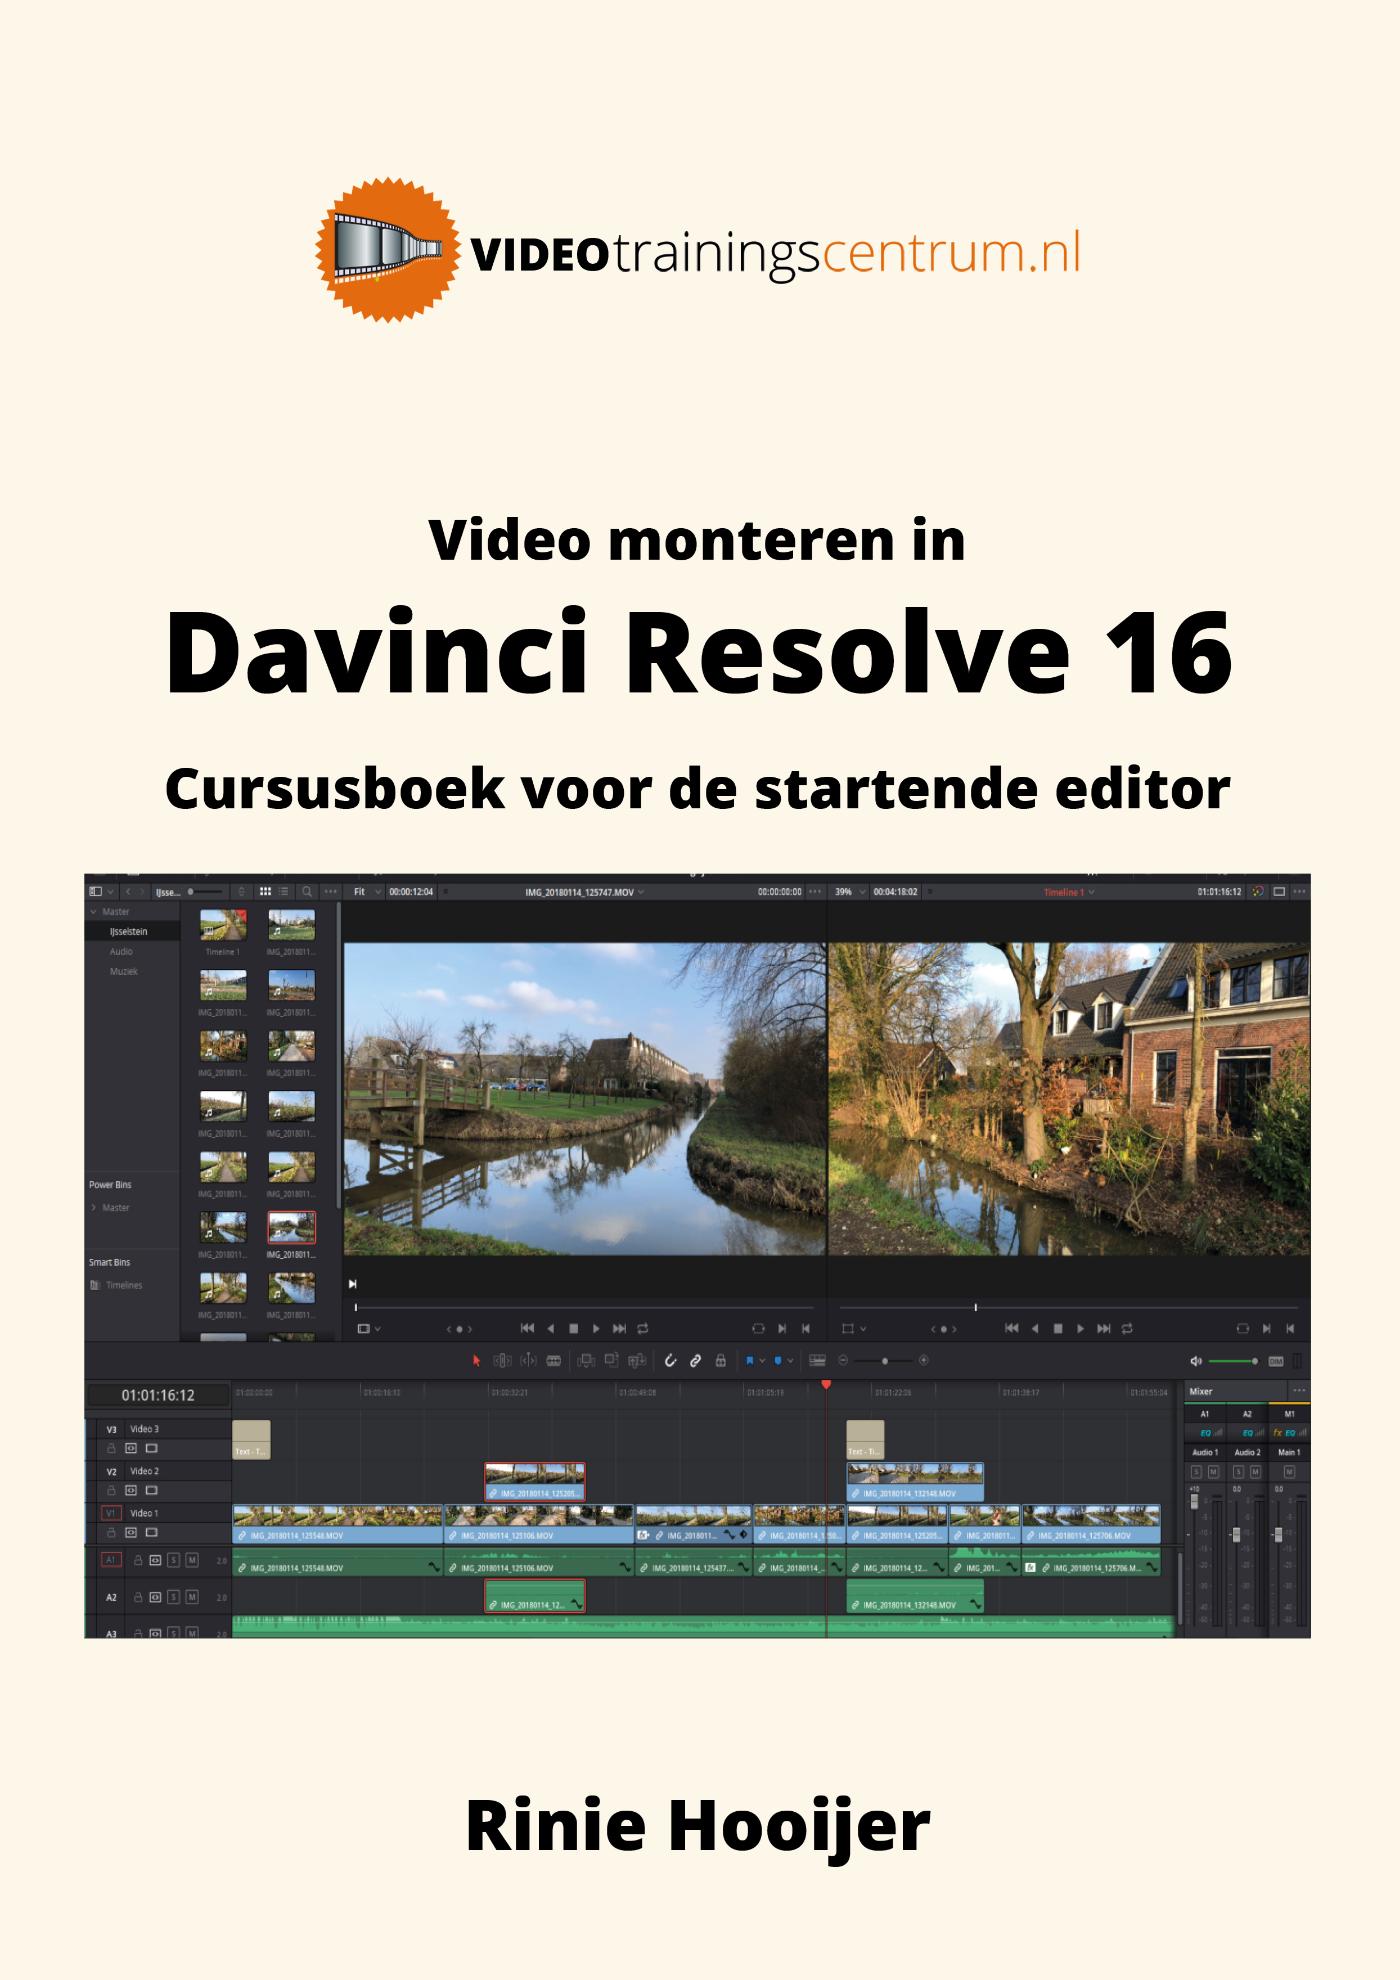 Video monteren in Davinci Resolve 16 (Ebook)